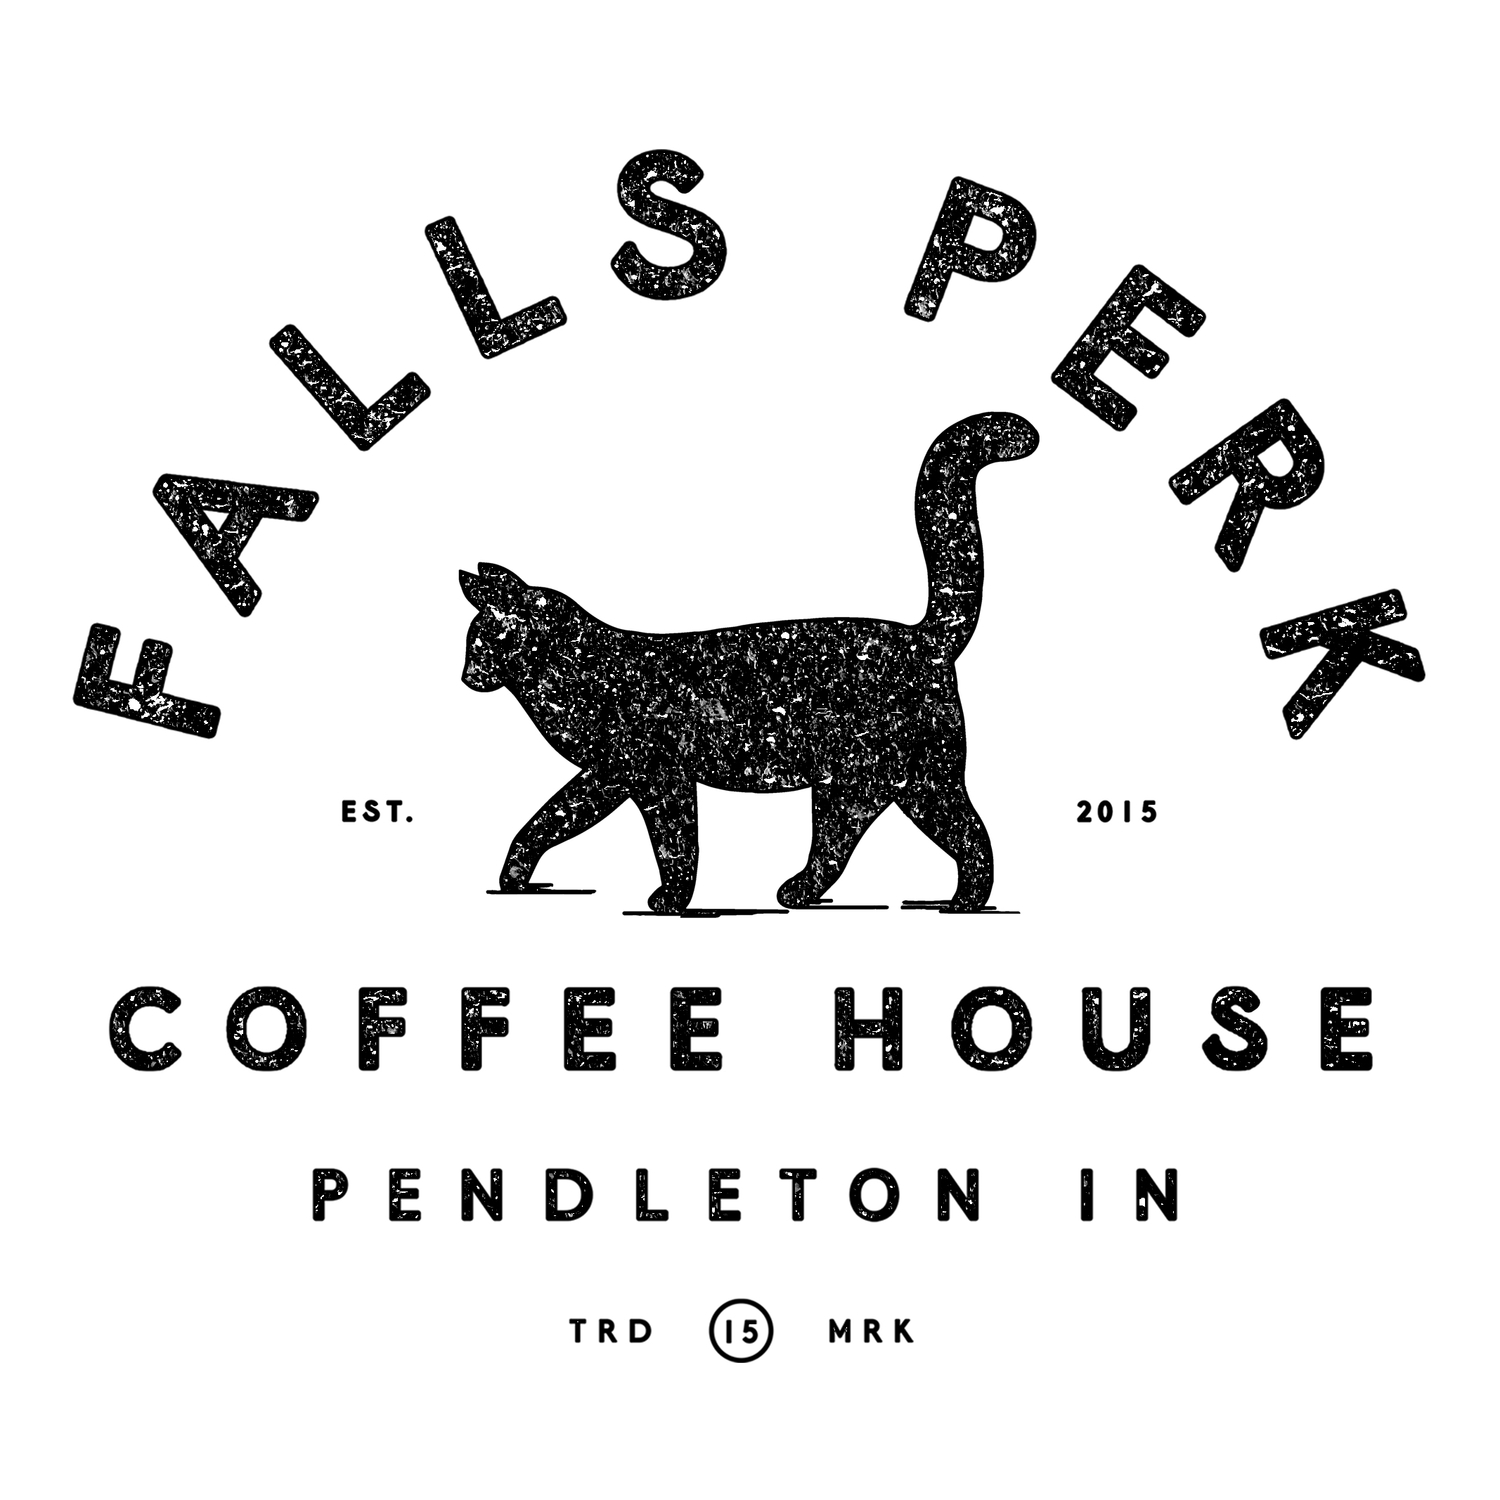 Falls Perk Coffee House